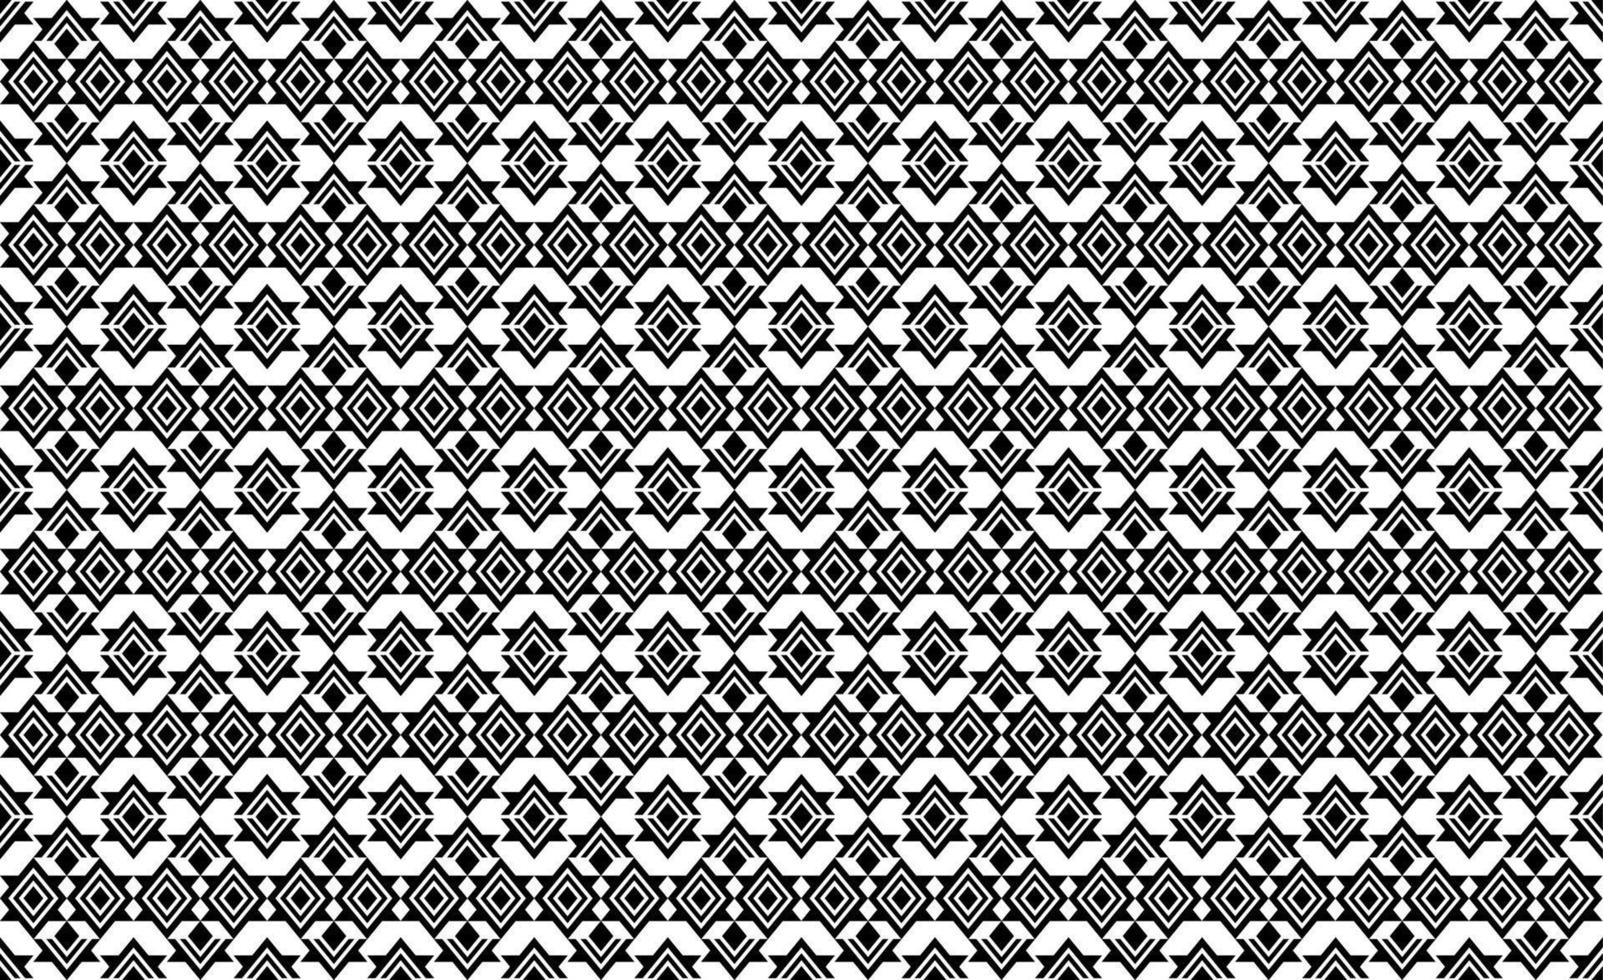 patroon ontwerp met meetkundig vormen. vector